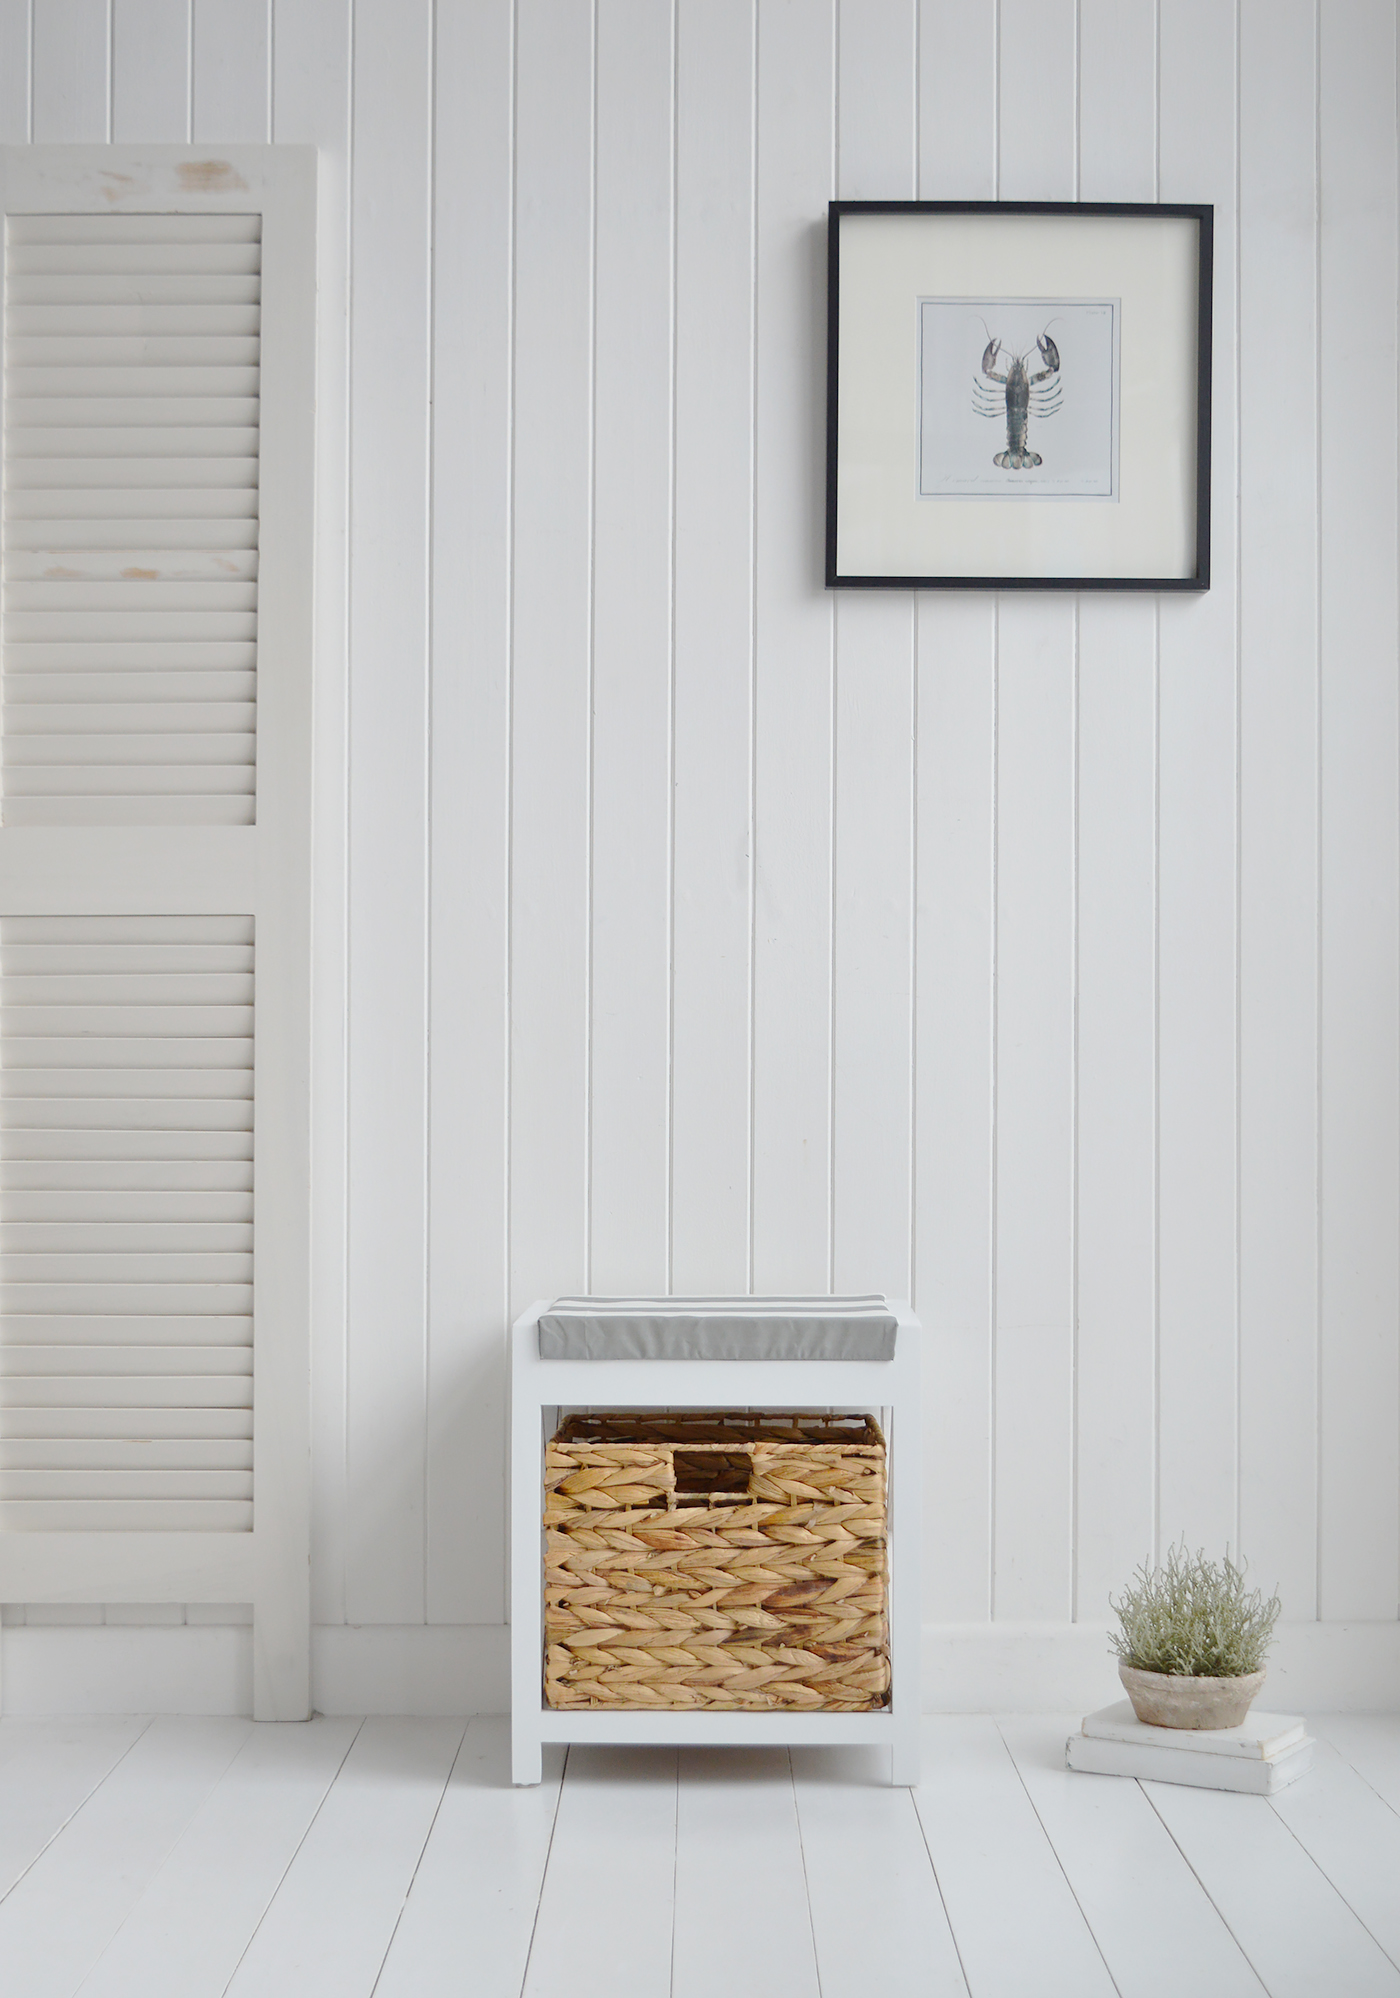 Northport White Storage Seat with basket - New England Modern Farmhouse and Coastal Storage Furniture